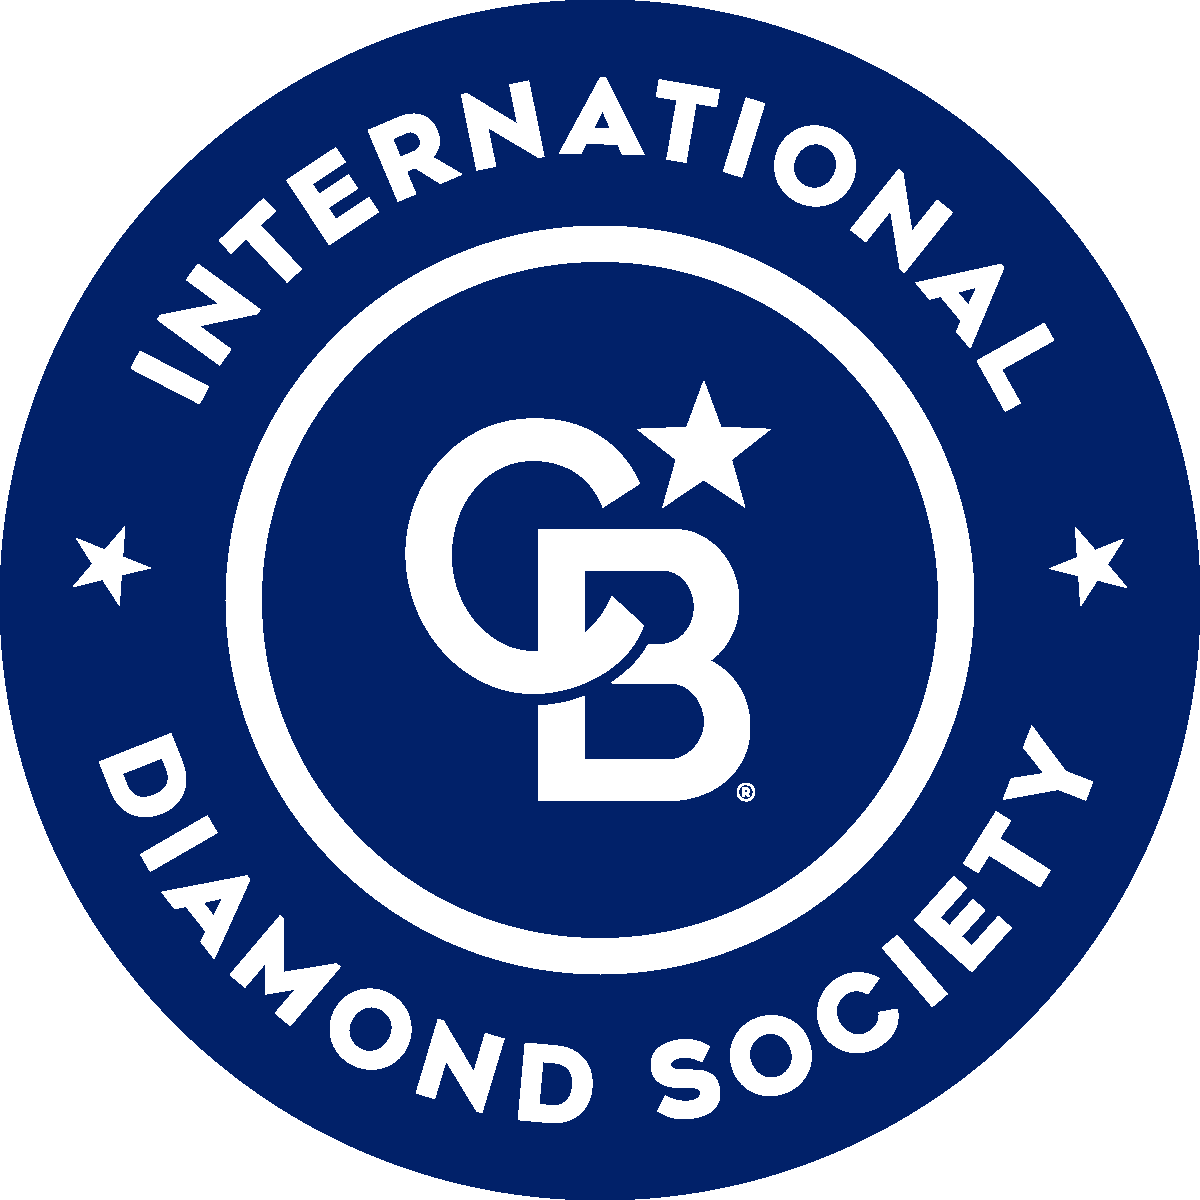 Diamond_Society_Blue_RGB